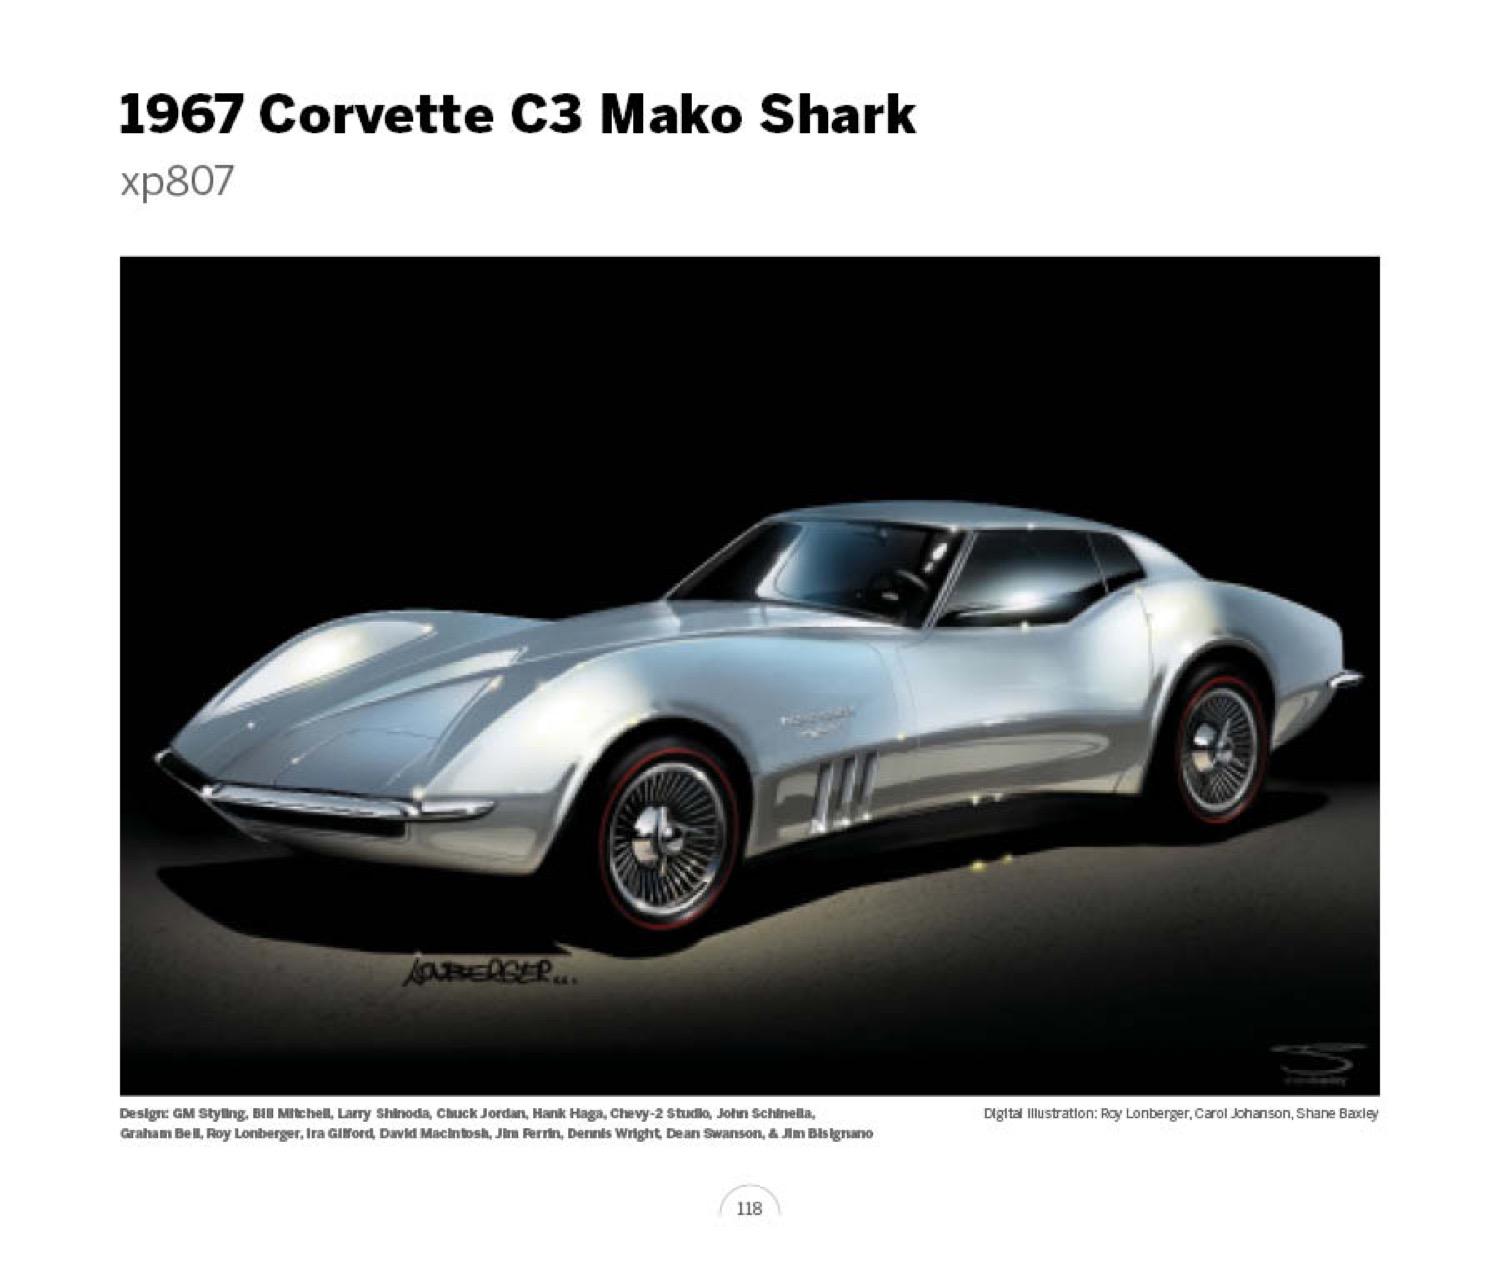 (14) 1967 Corvette C3 Mako Shark xp807 LoRez.jpg